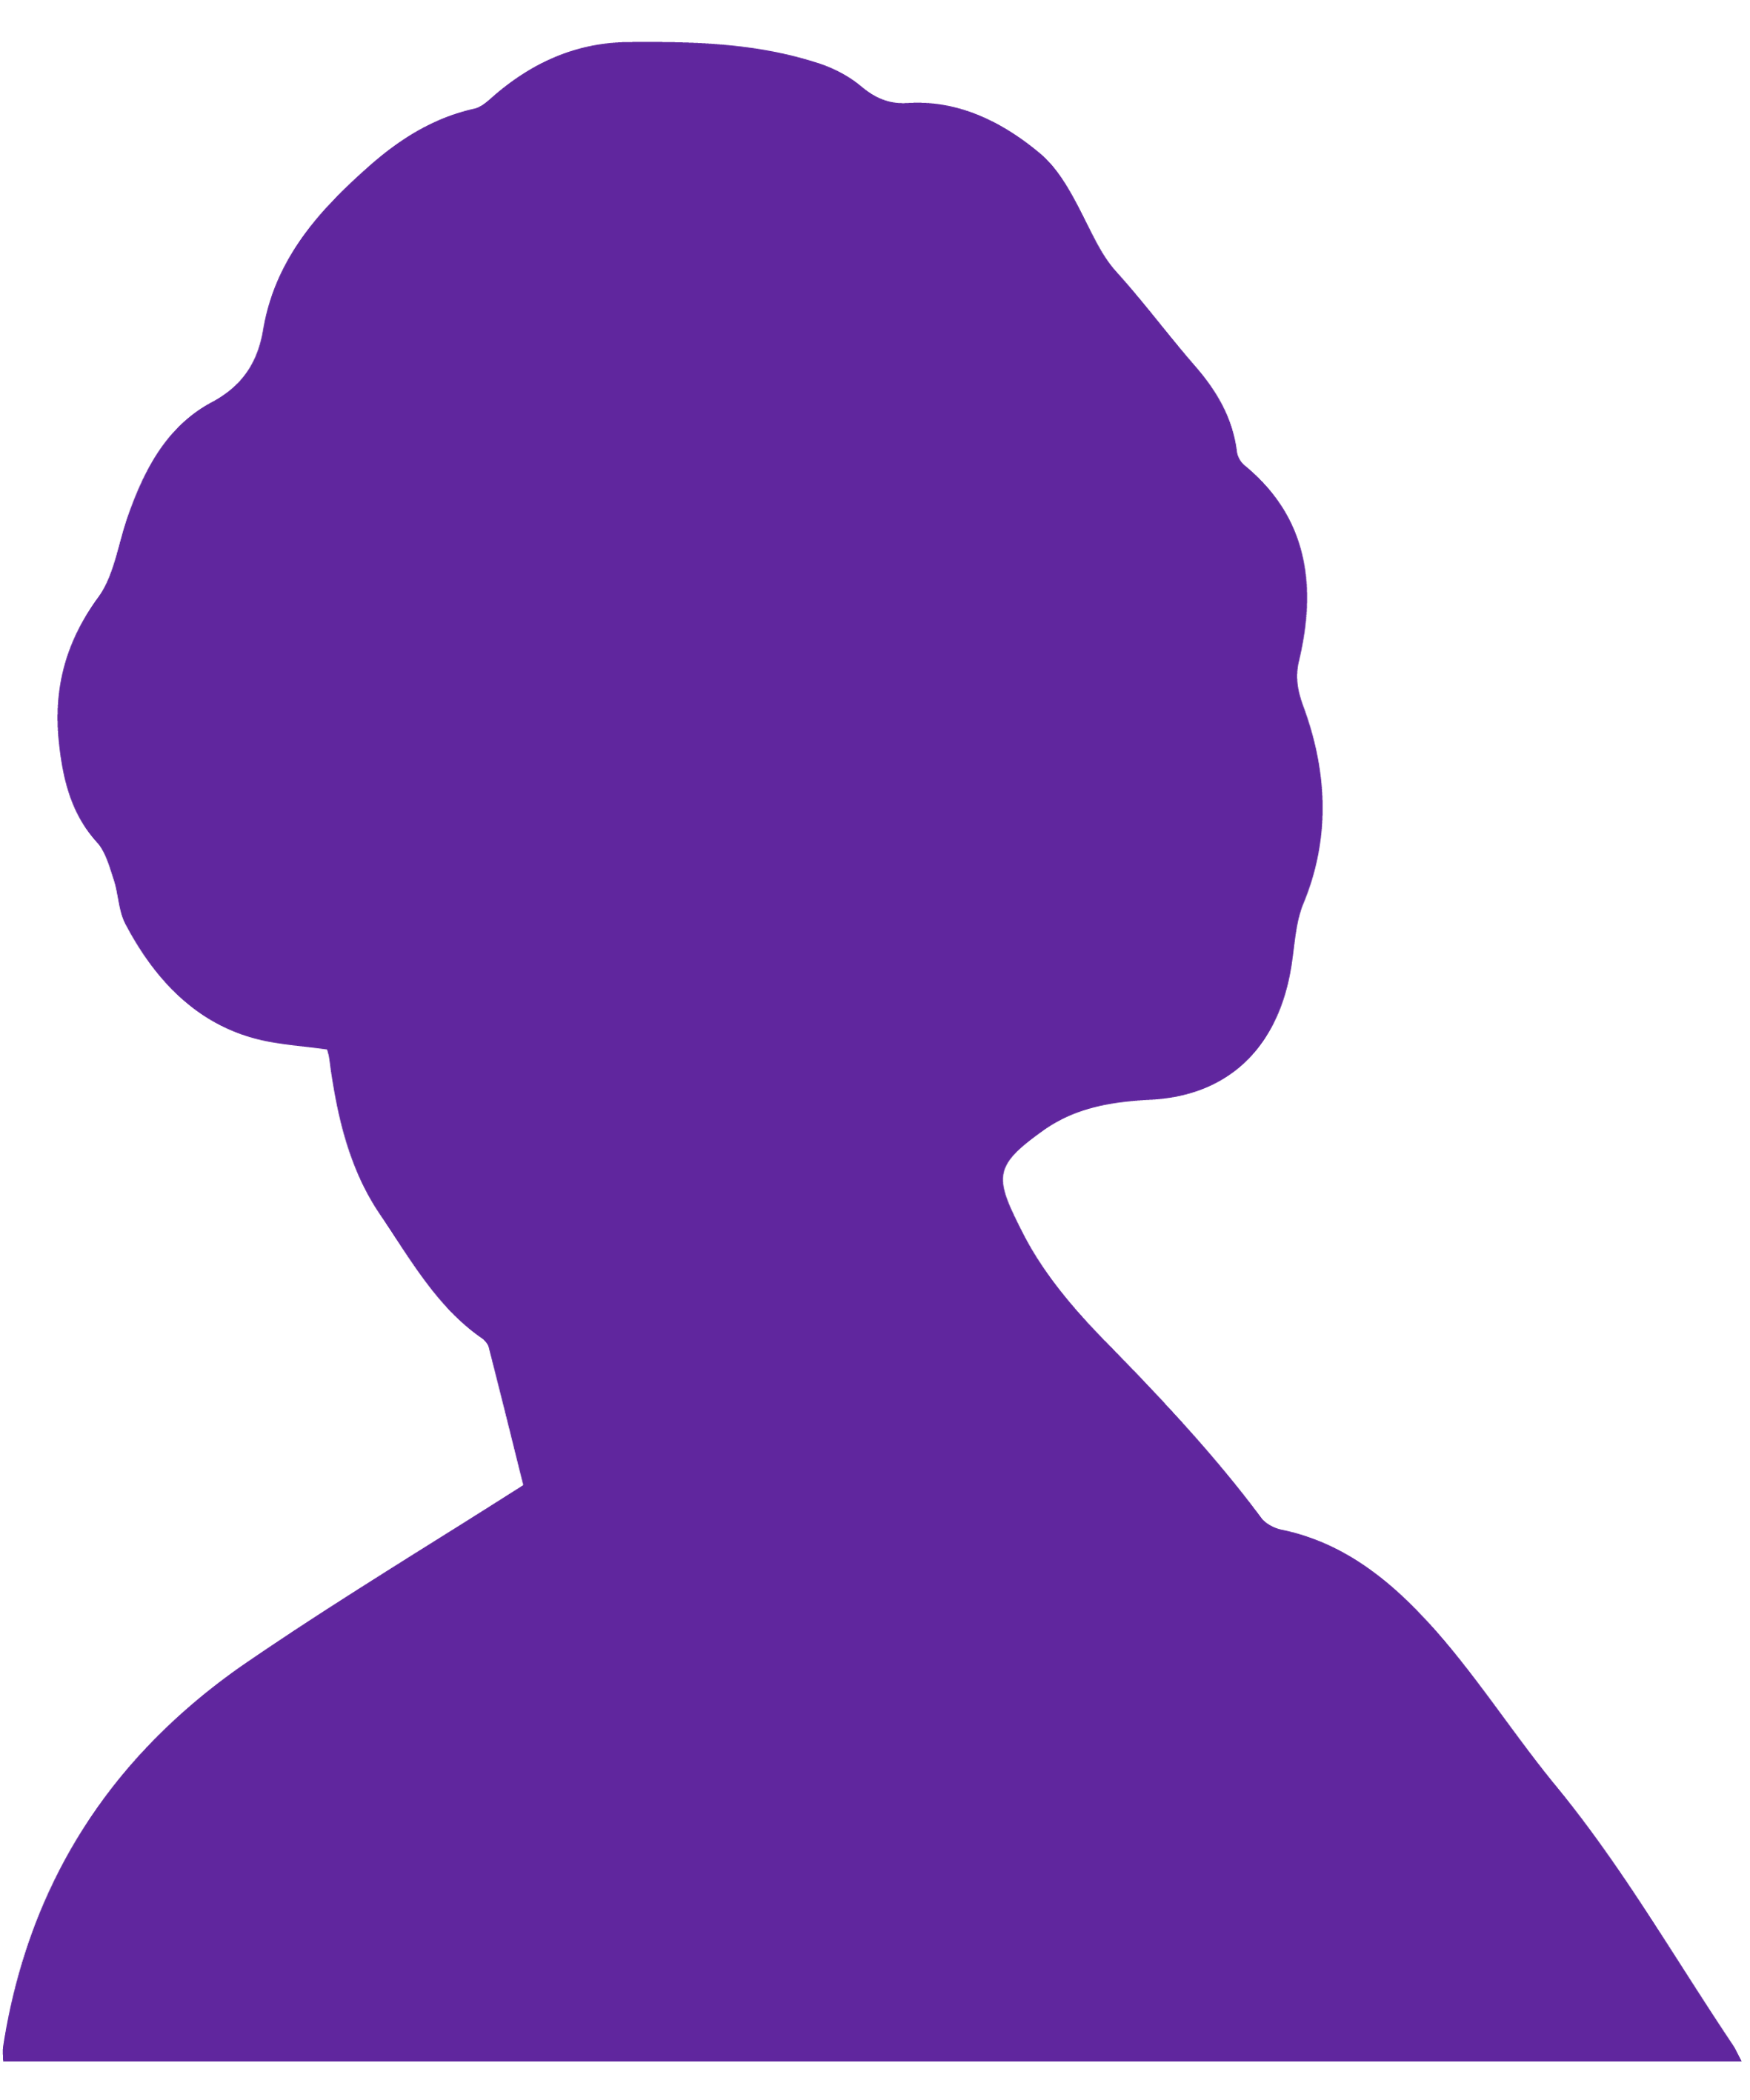 Purple silhouette of Marion Pollock